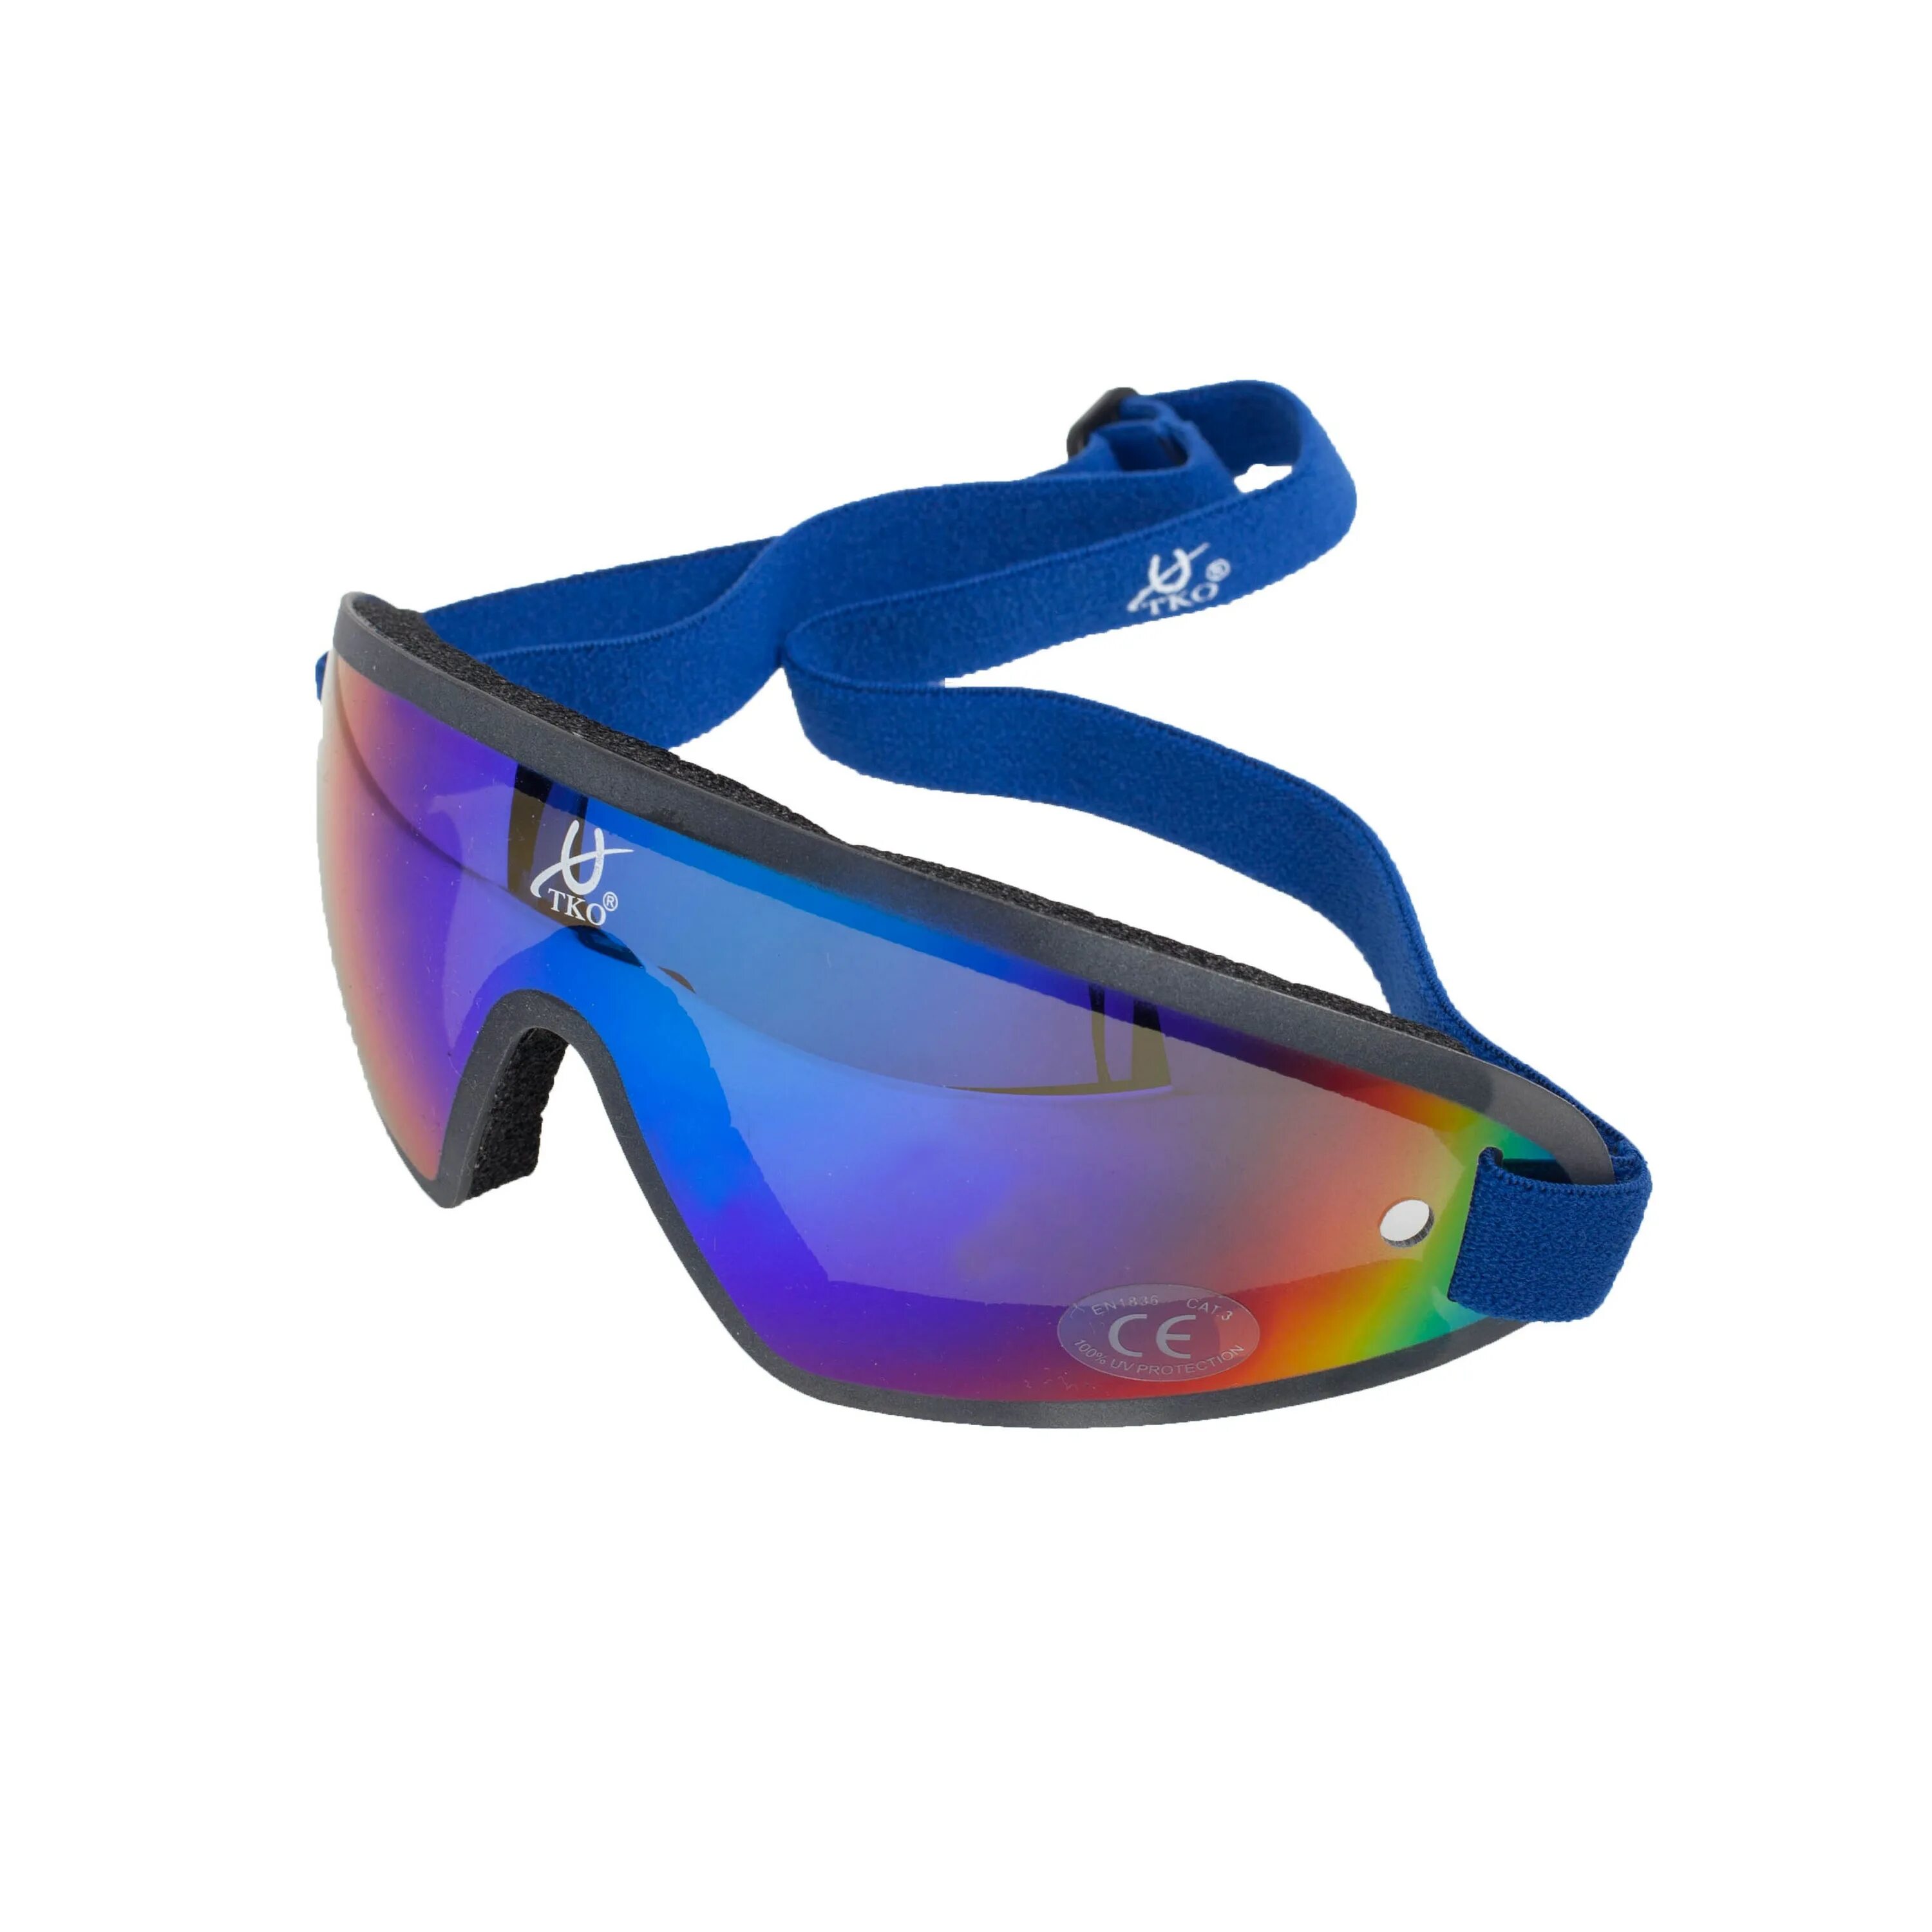 Vehla очки купить. Скаковые очки. Очки Racing Goggle Health Leef. Gill Pro Racing Goggles /плавучие/ Англия. Aerodynamic Sunglasses.